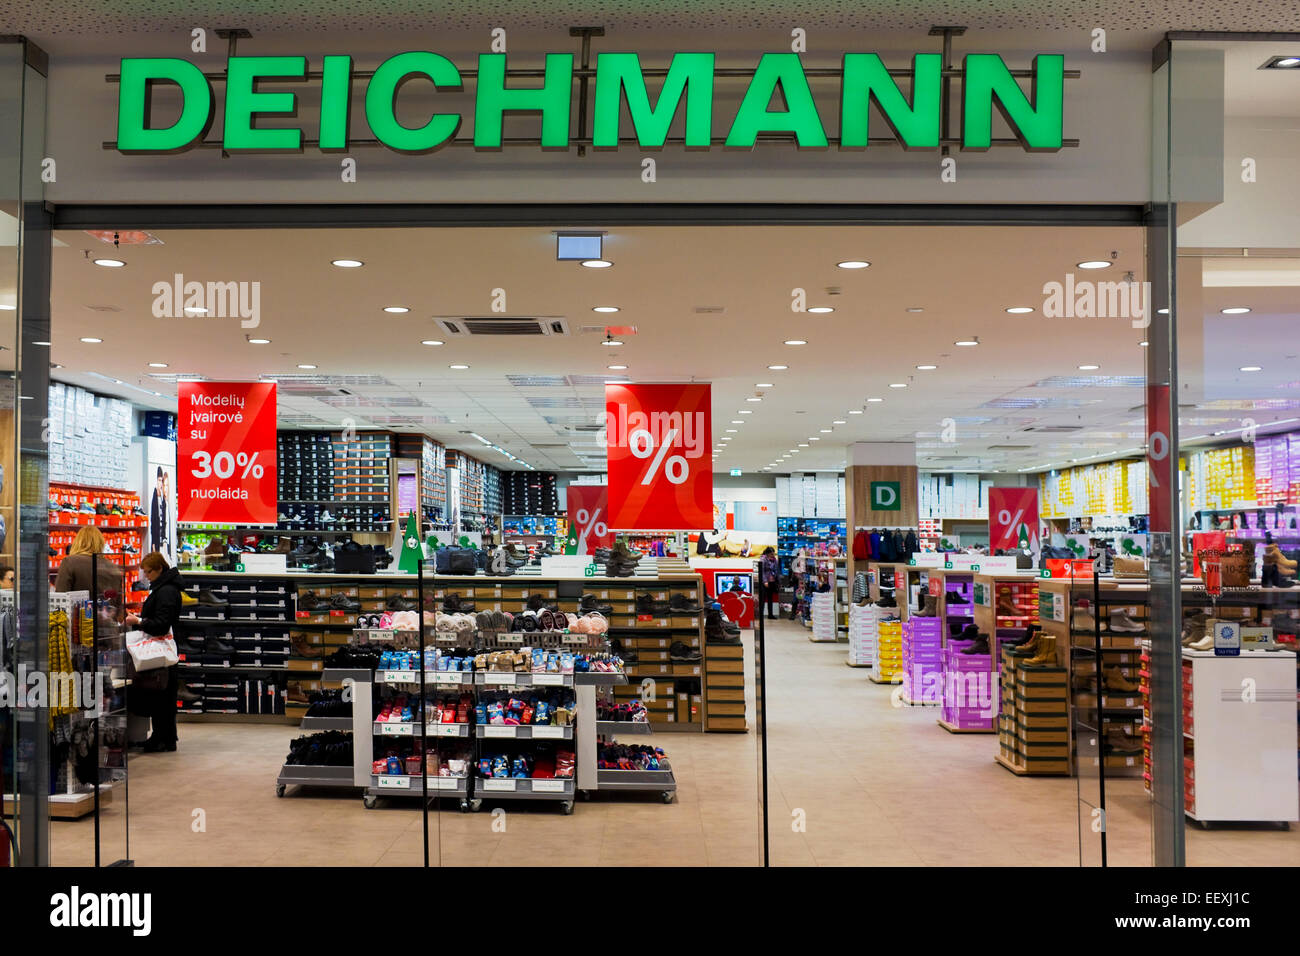 Deichmann High Resolution Stock Photography - Alamy